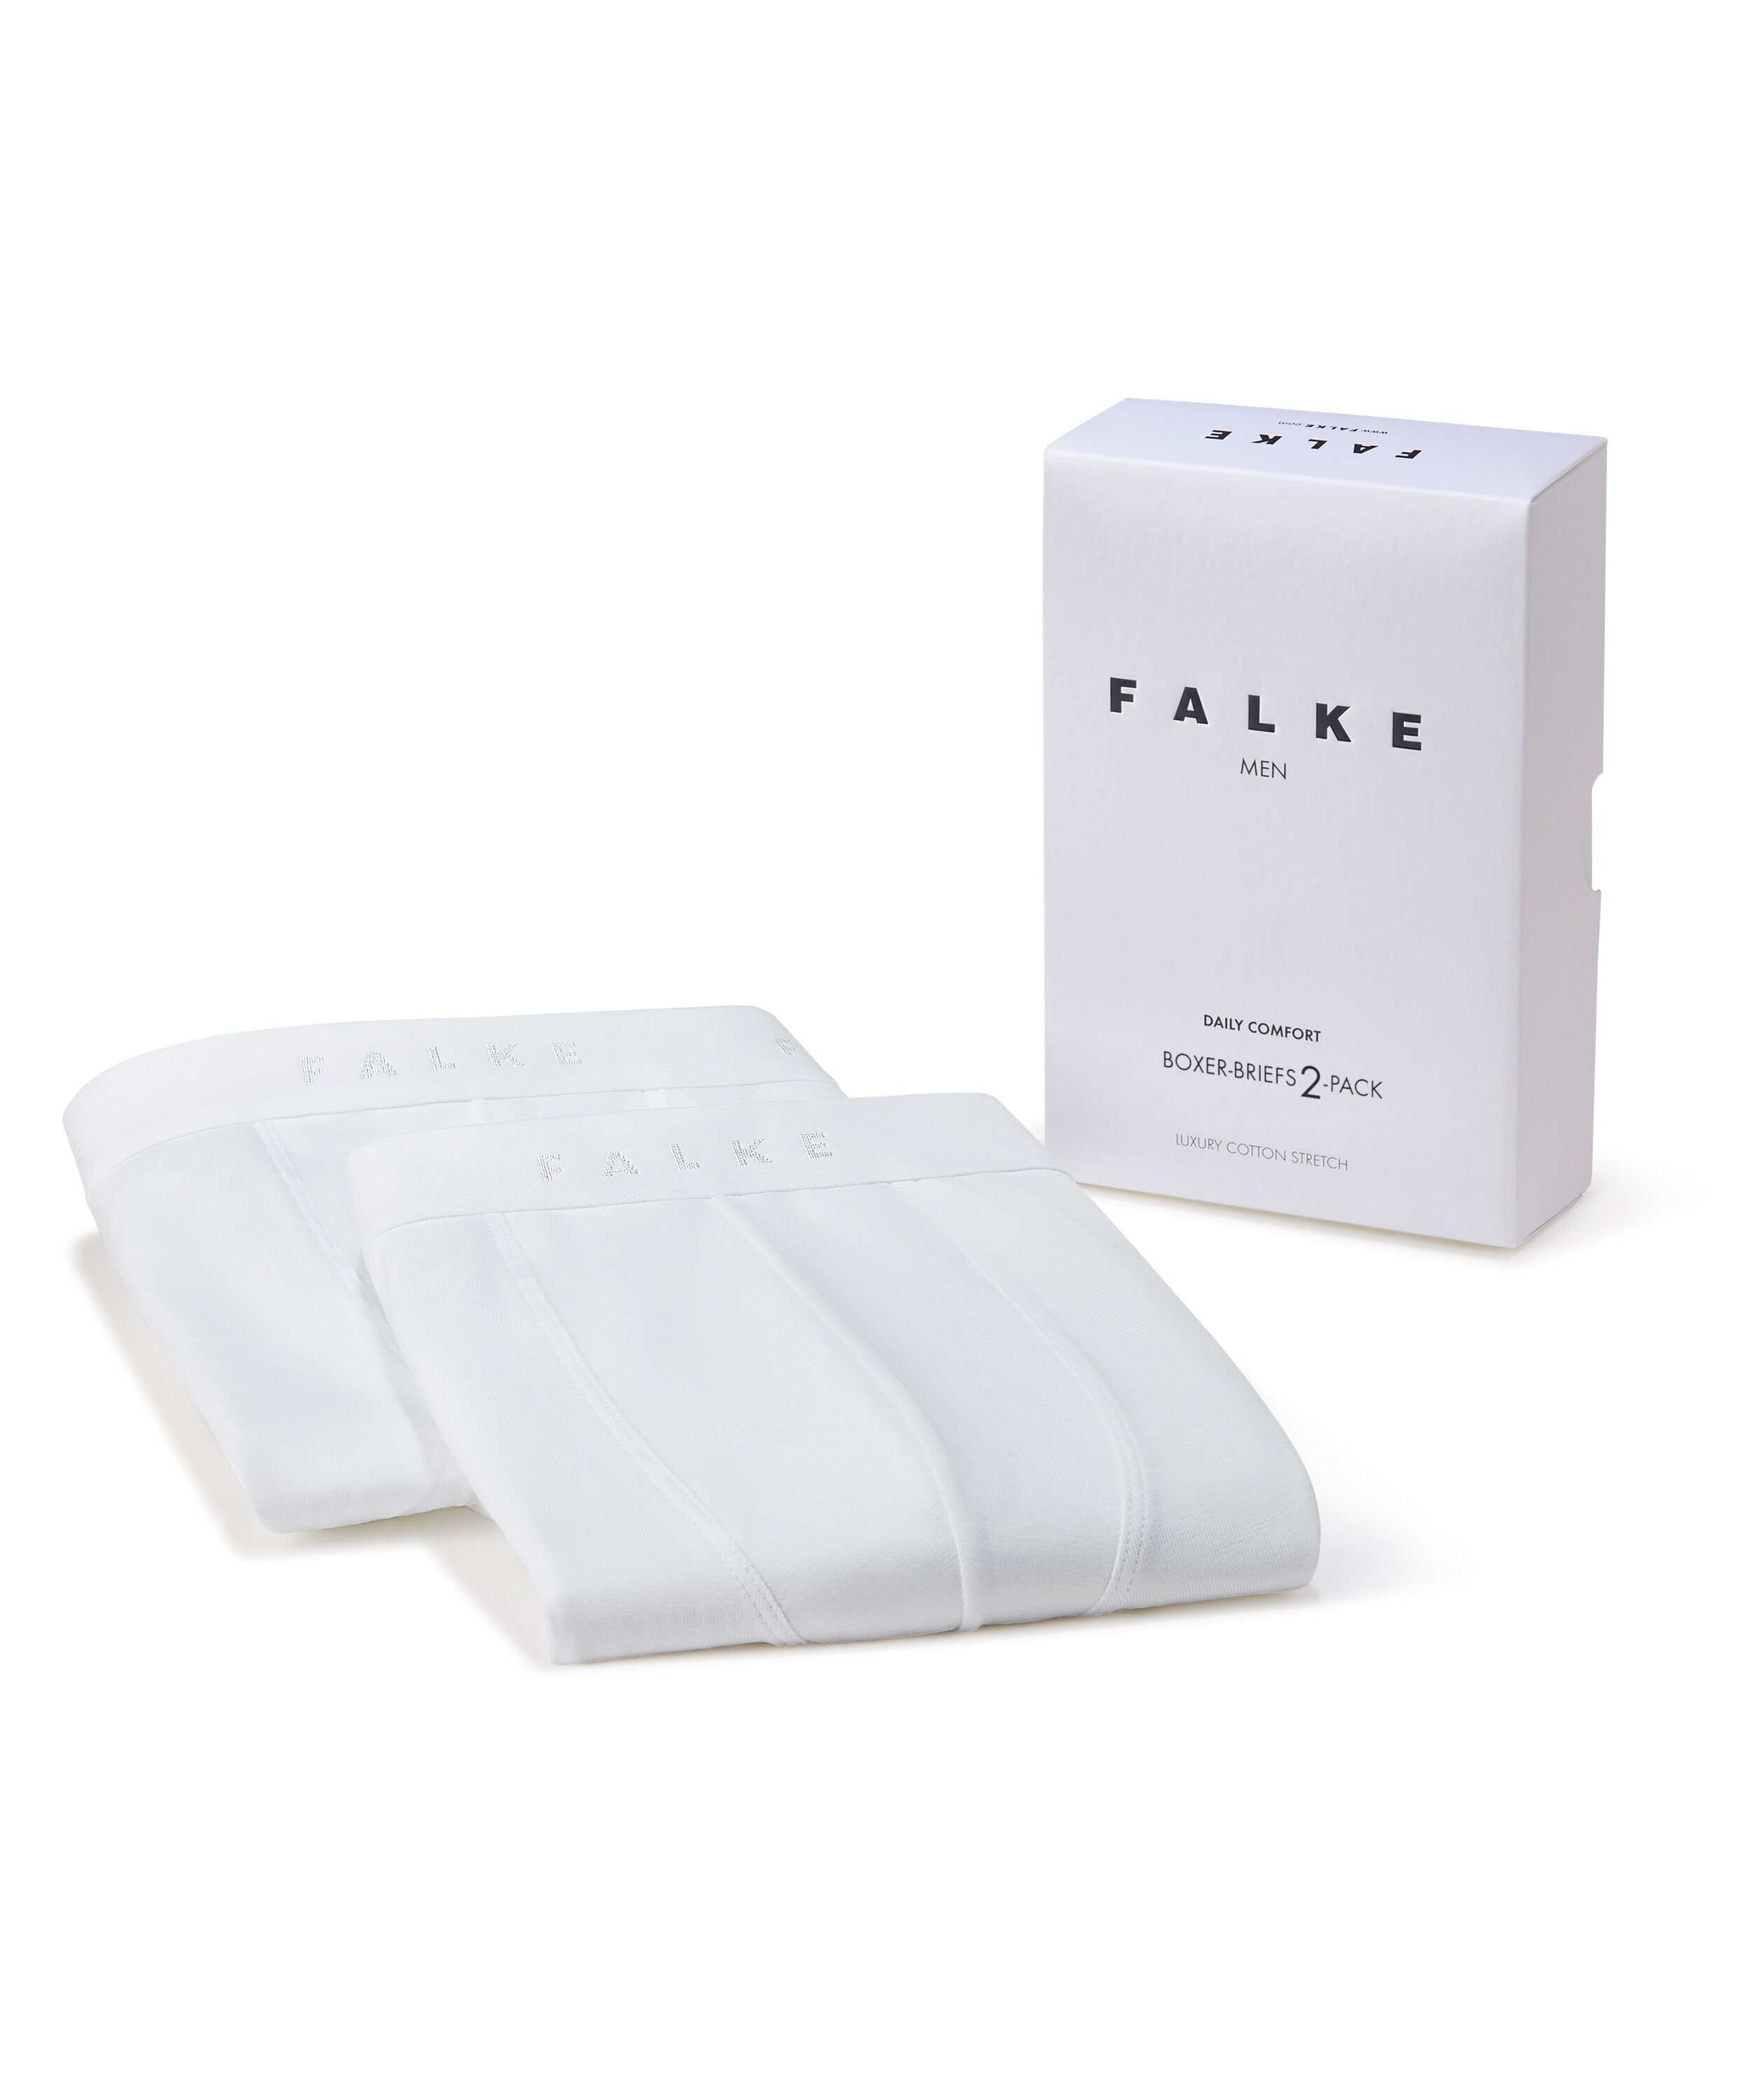 (2000) Softe 2-Pack Boxershorts FALKE (2-St) white Baumwolle Elasthan mit